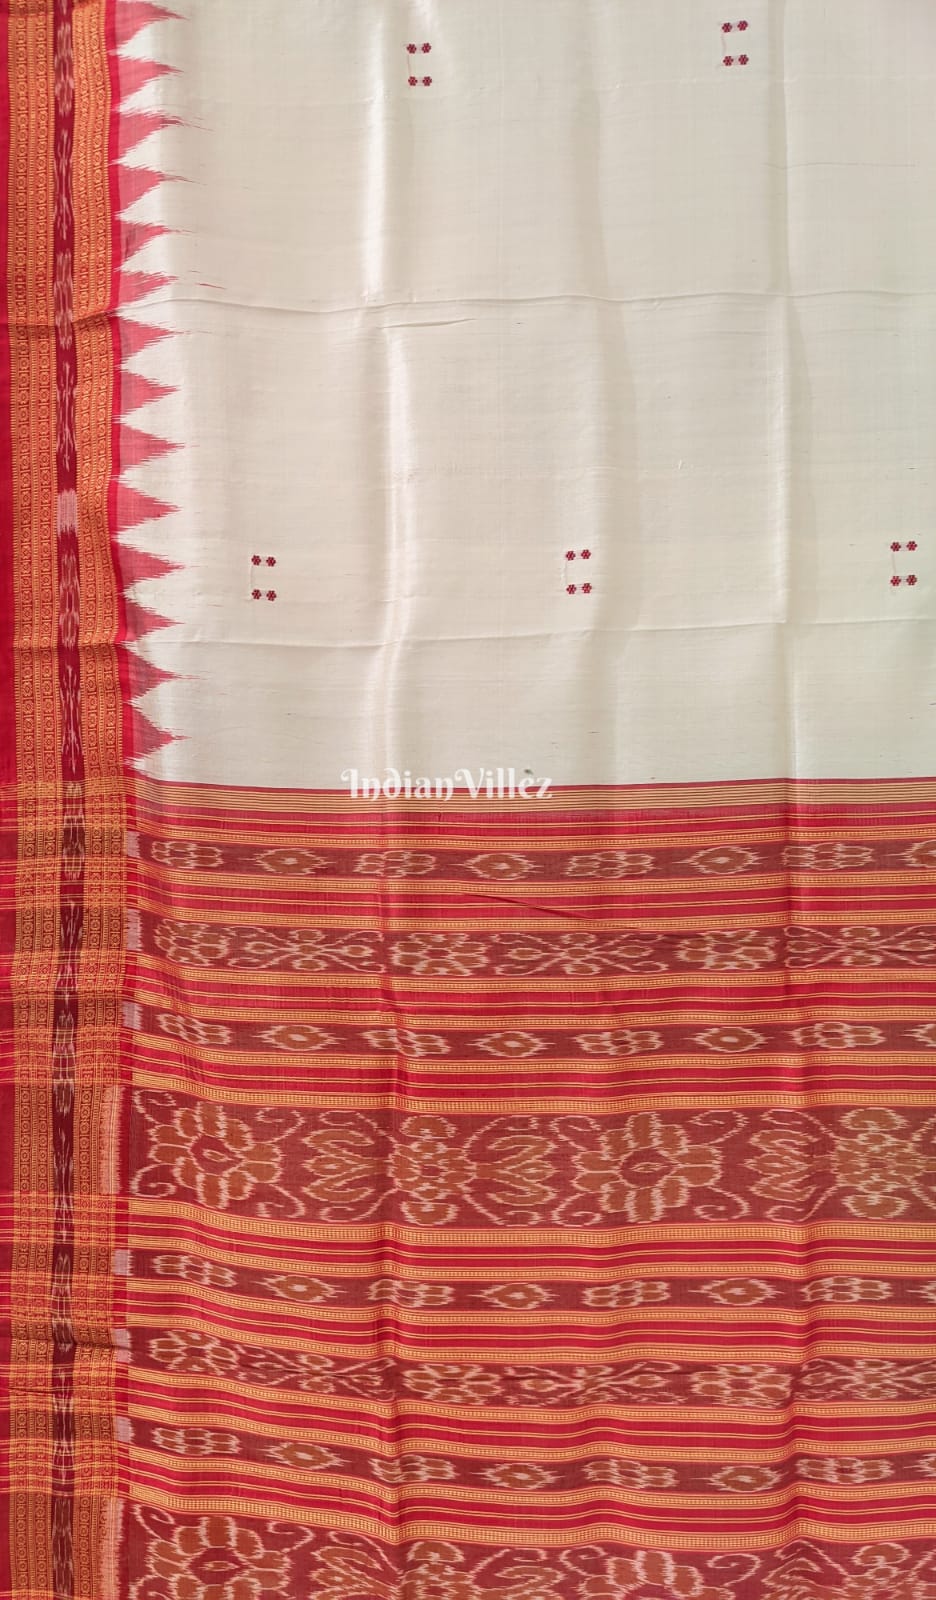 Utkalamrita - #odisha #Handloom #sambalpuri #aswini #cotton #saree with  #tribal #croptop! #iwearhandloom #odishahandloom #iwearodishahandloom . .  Info about our Odisha's gorgeous Sambalpuri Bandha Saree & Fabrics from GI  (Geographical Indications ...